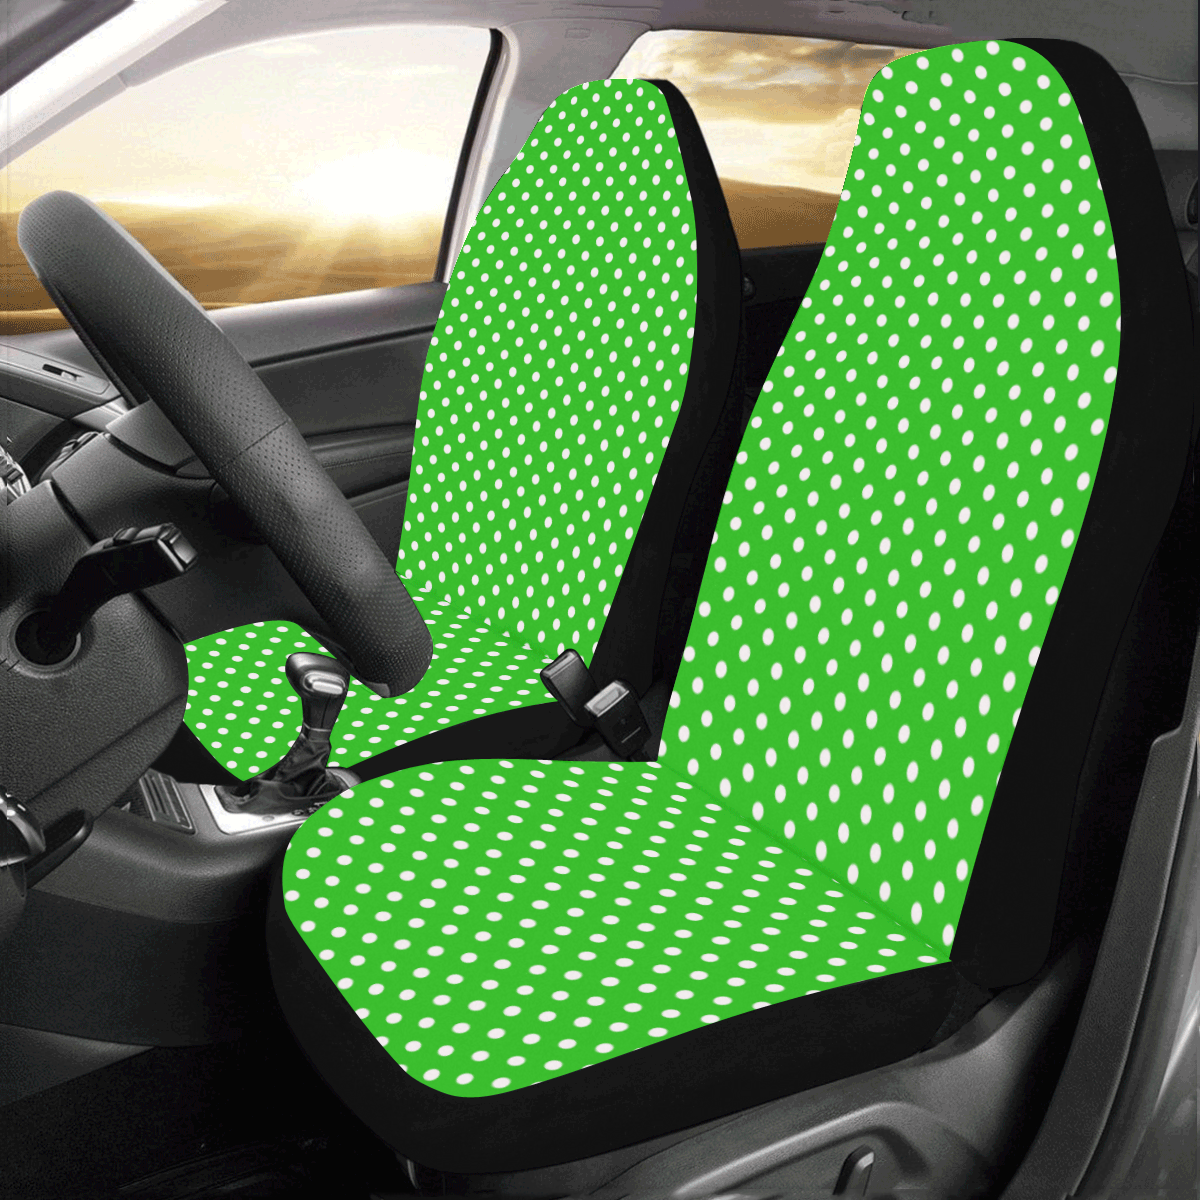 Green polka dots Car Seat Covers (Set of 2)